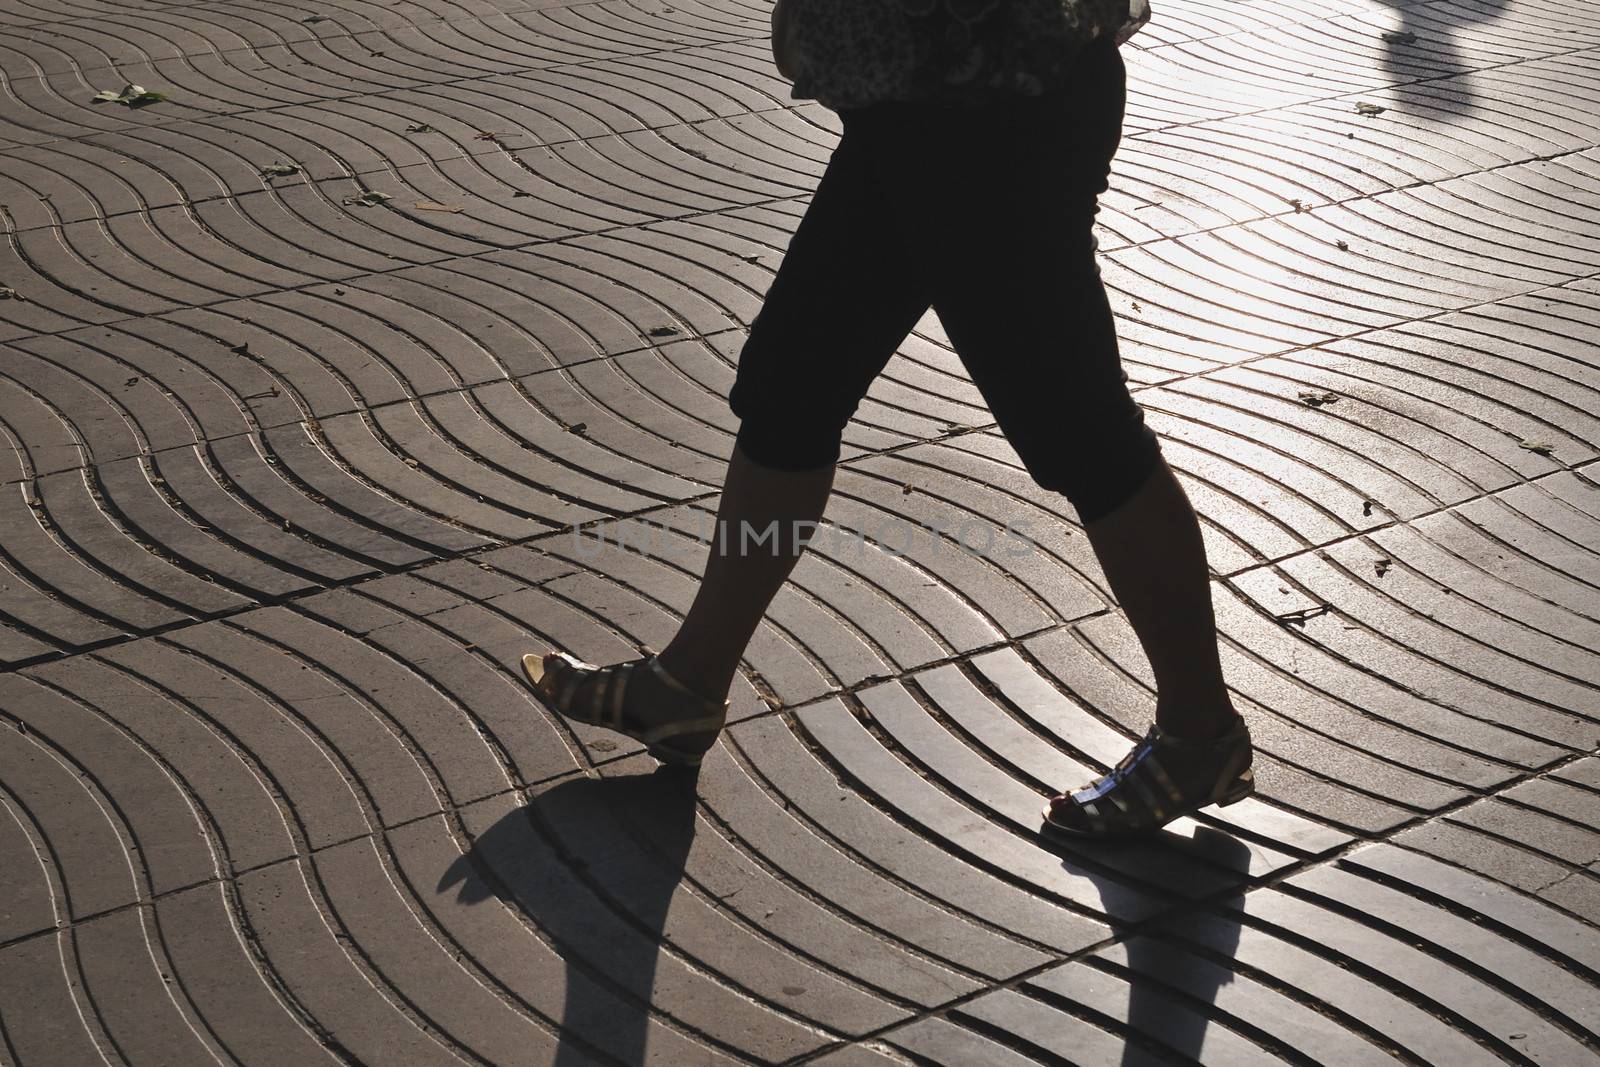 wave pattern tiled pavement of famous La Rambla street in Barcelona with walking woman silhouette